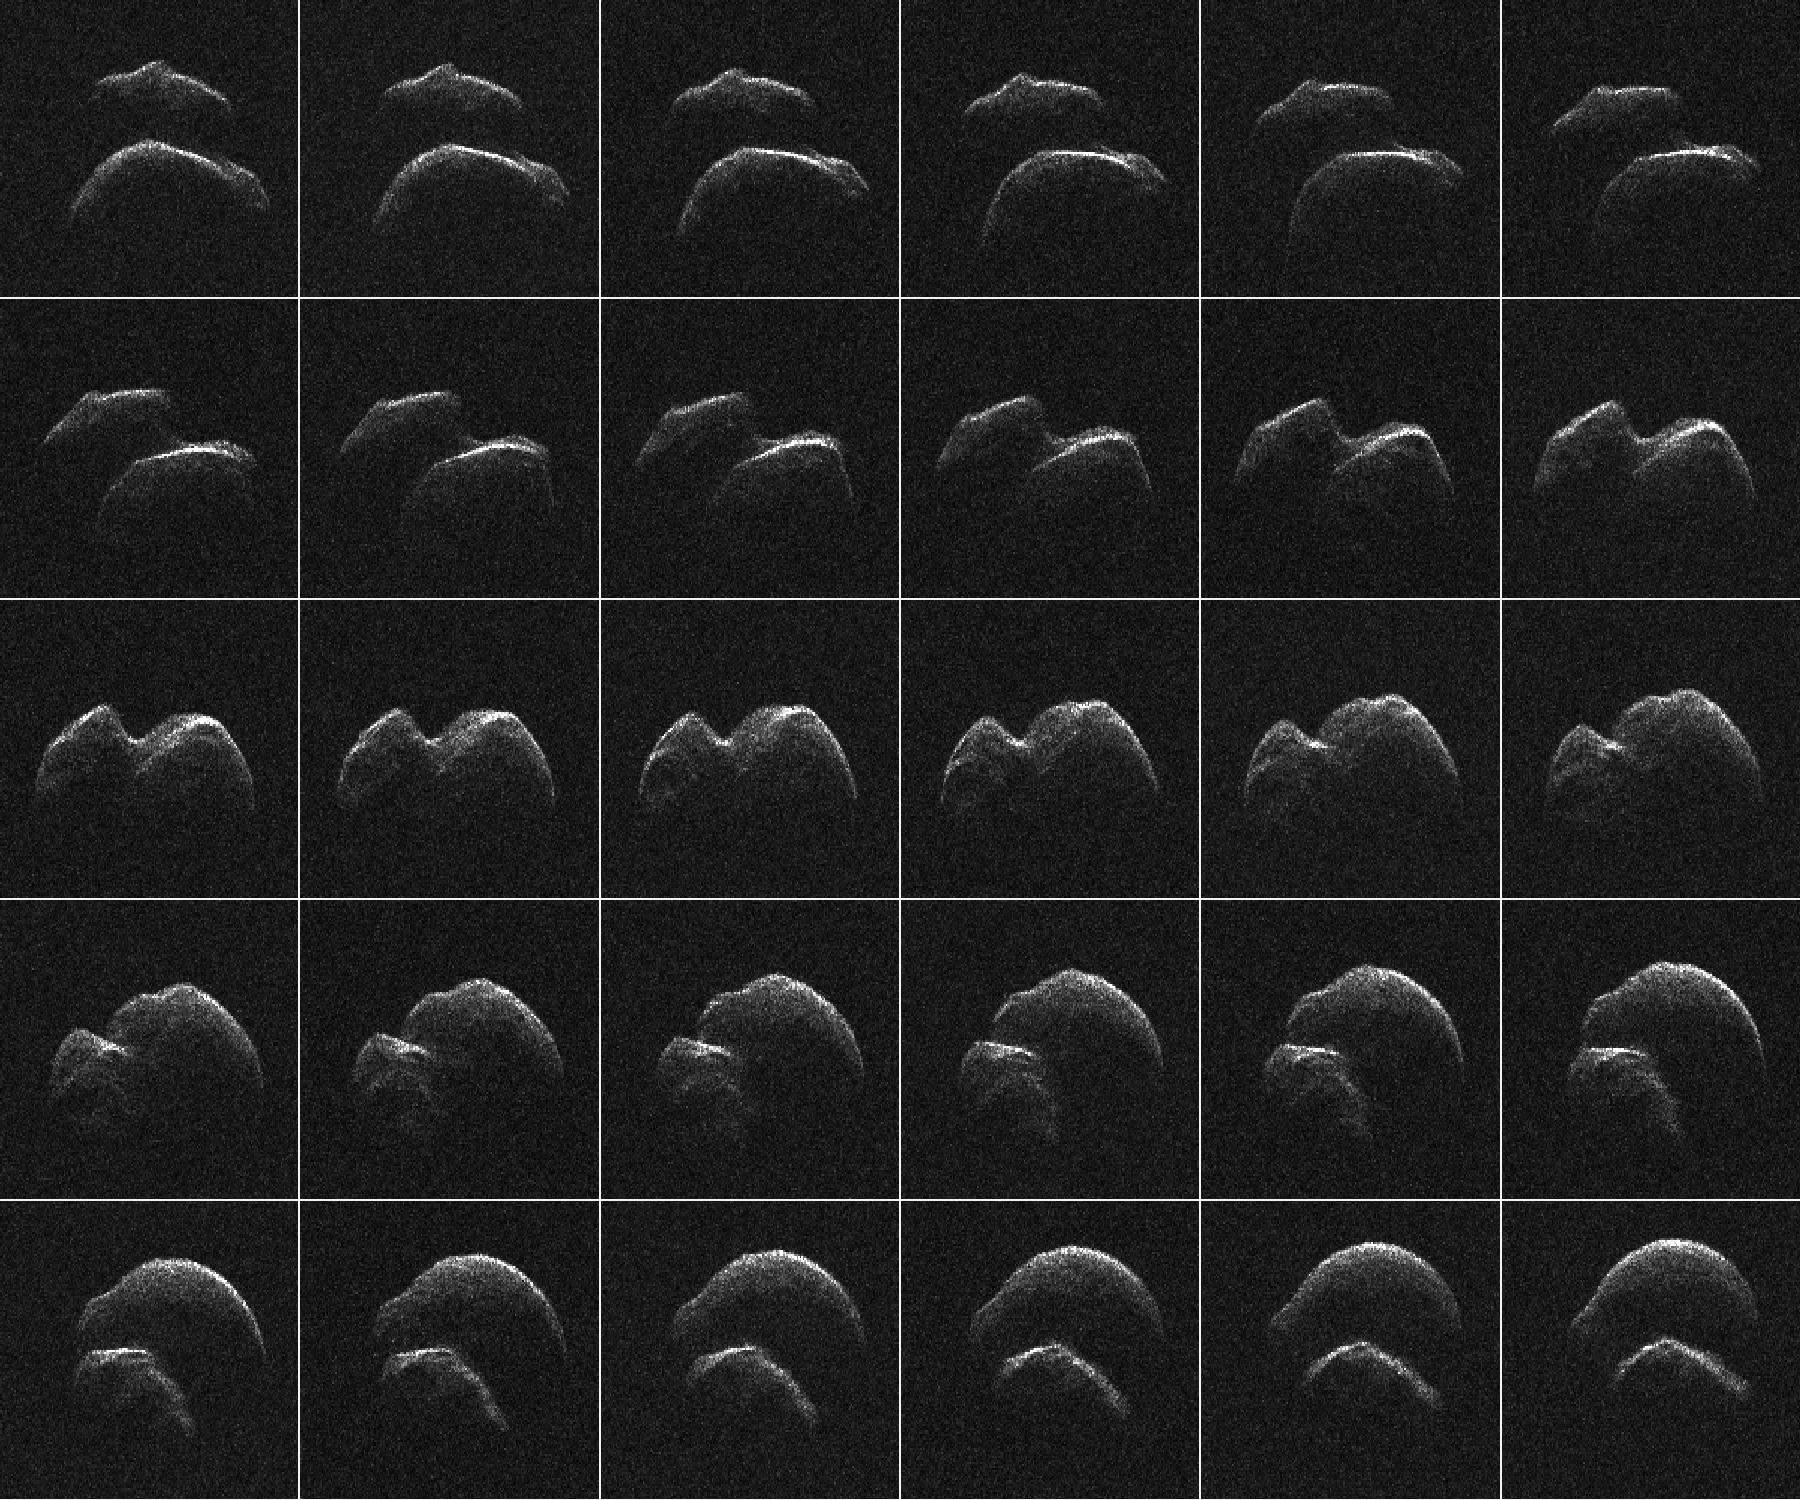 Radar Imagery of Asteroid 2014 JO25